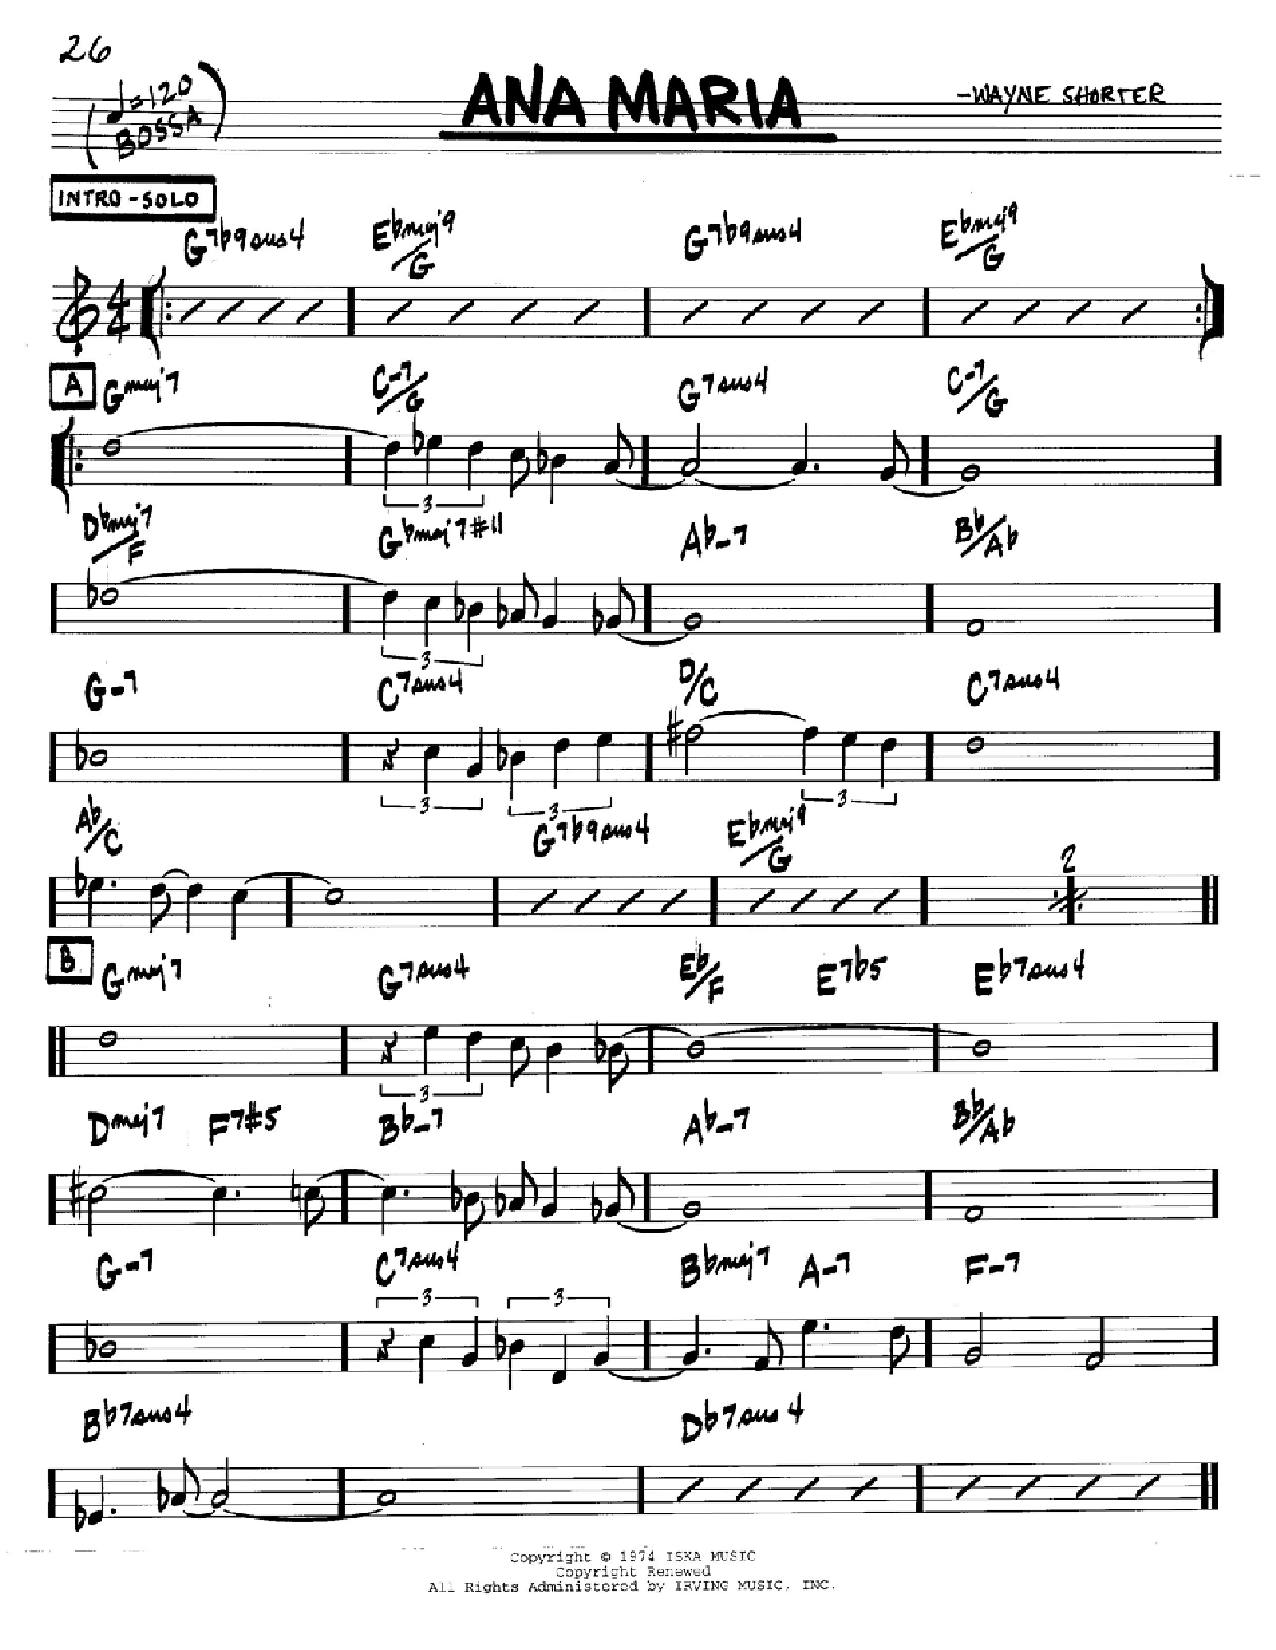 Wayne Shorter Ana Maria Sheet Music Notes & Chords for Real Book - Melody & Chords - C Instruments - Download or Print PDF